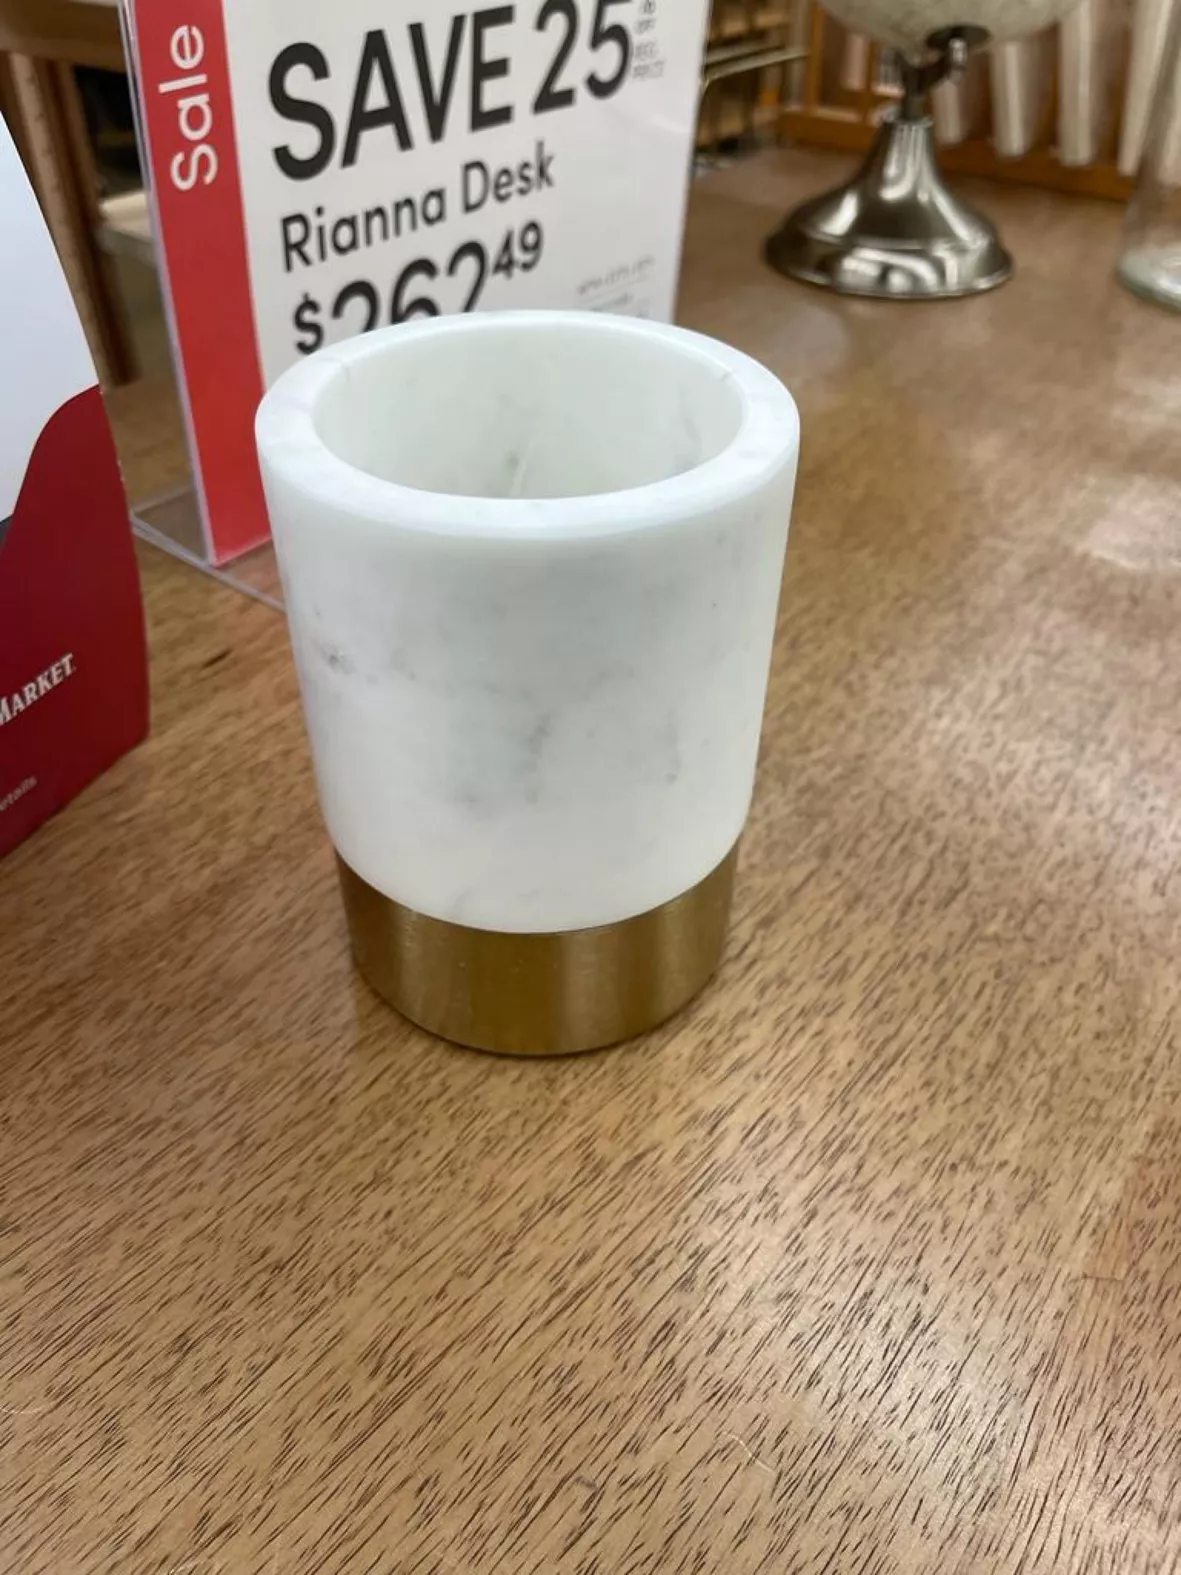 Marbled Ceramic Mug Set of 2 by World Market